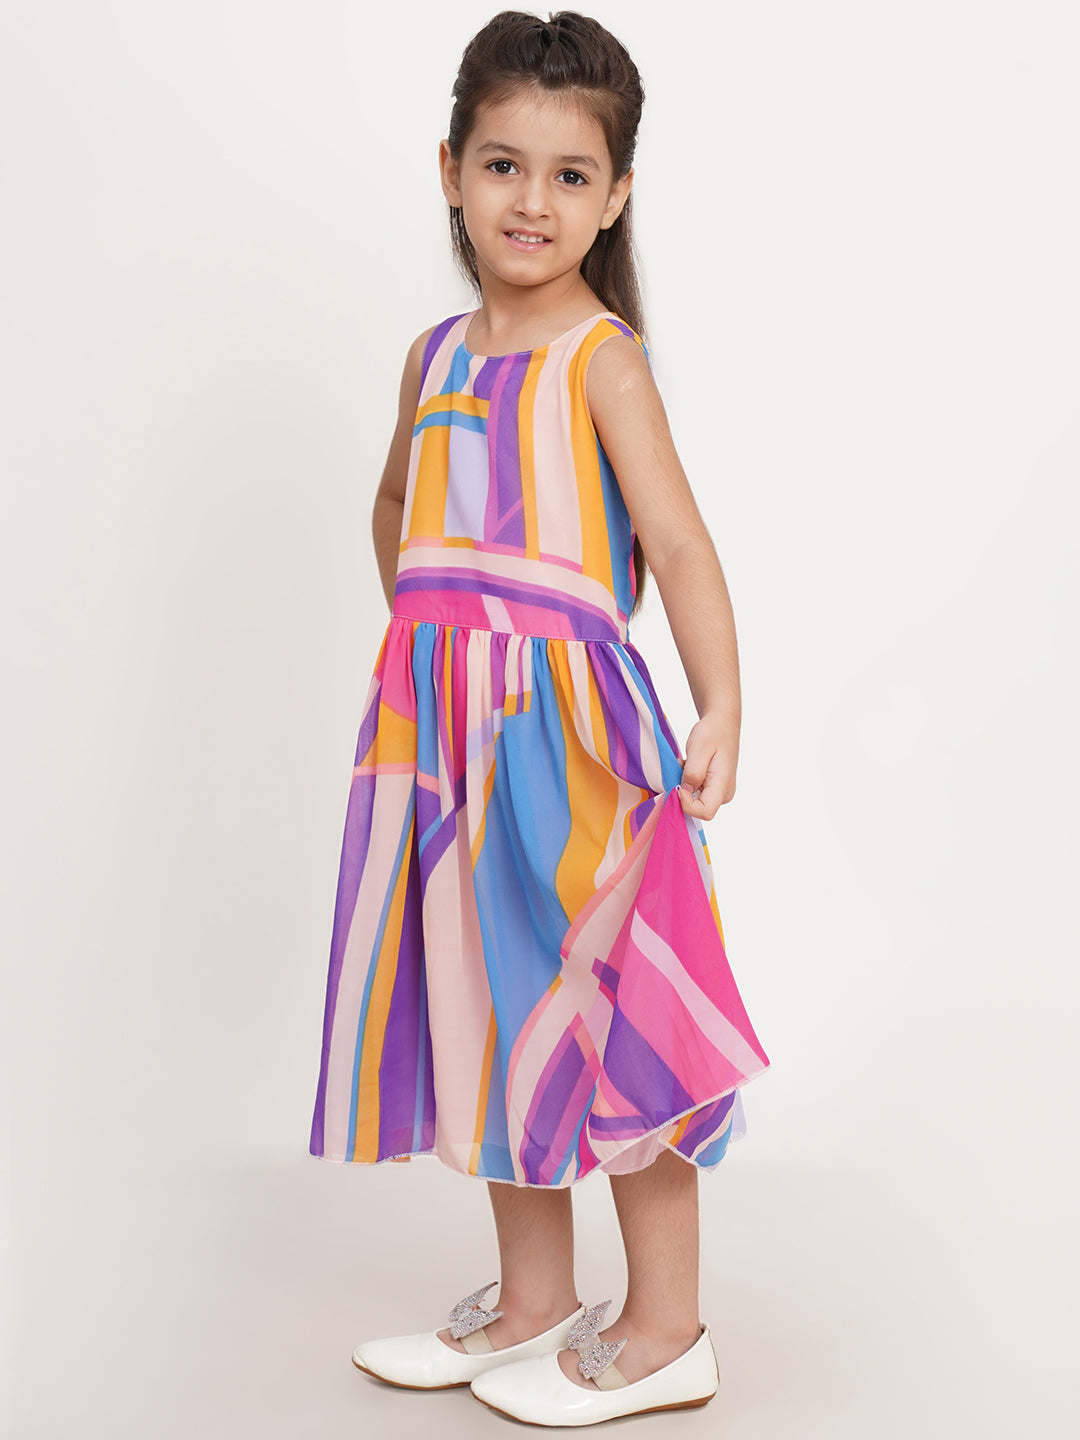 CREATIVE KID'S Girl Pink & Purple Abstract Print A-Line Dress